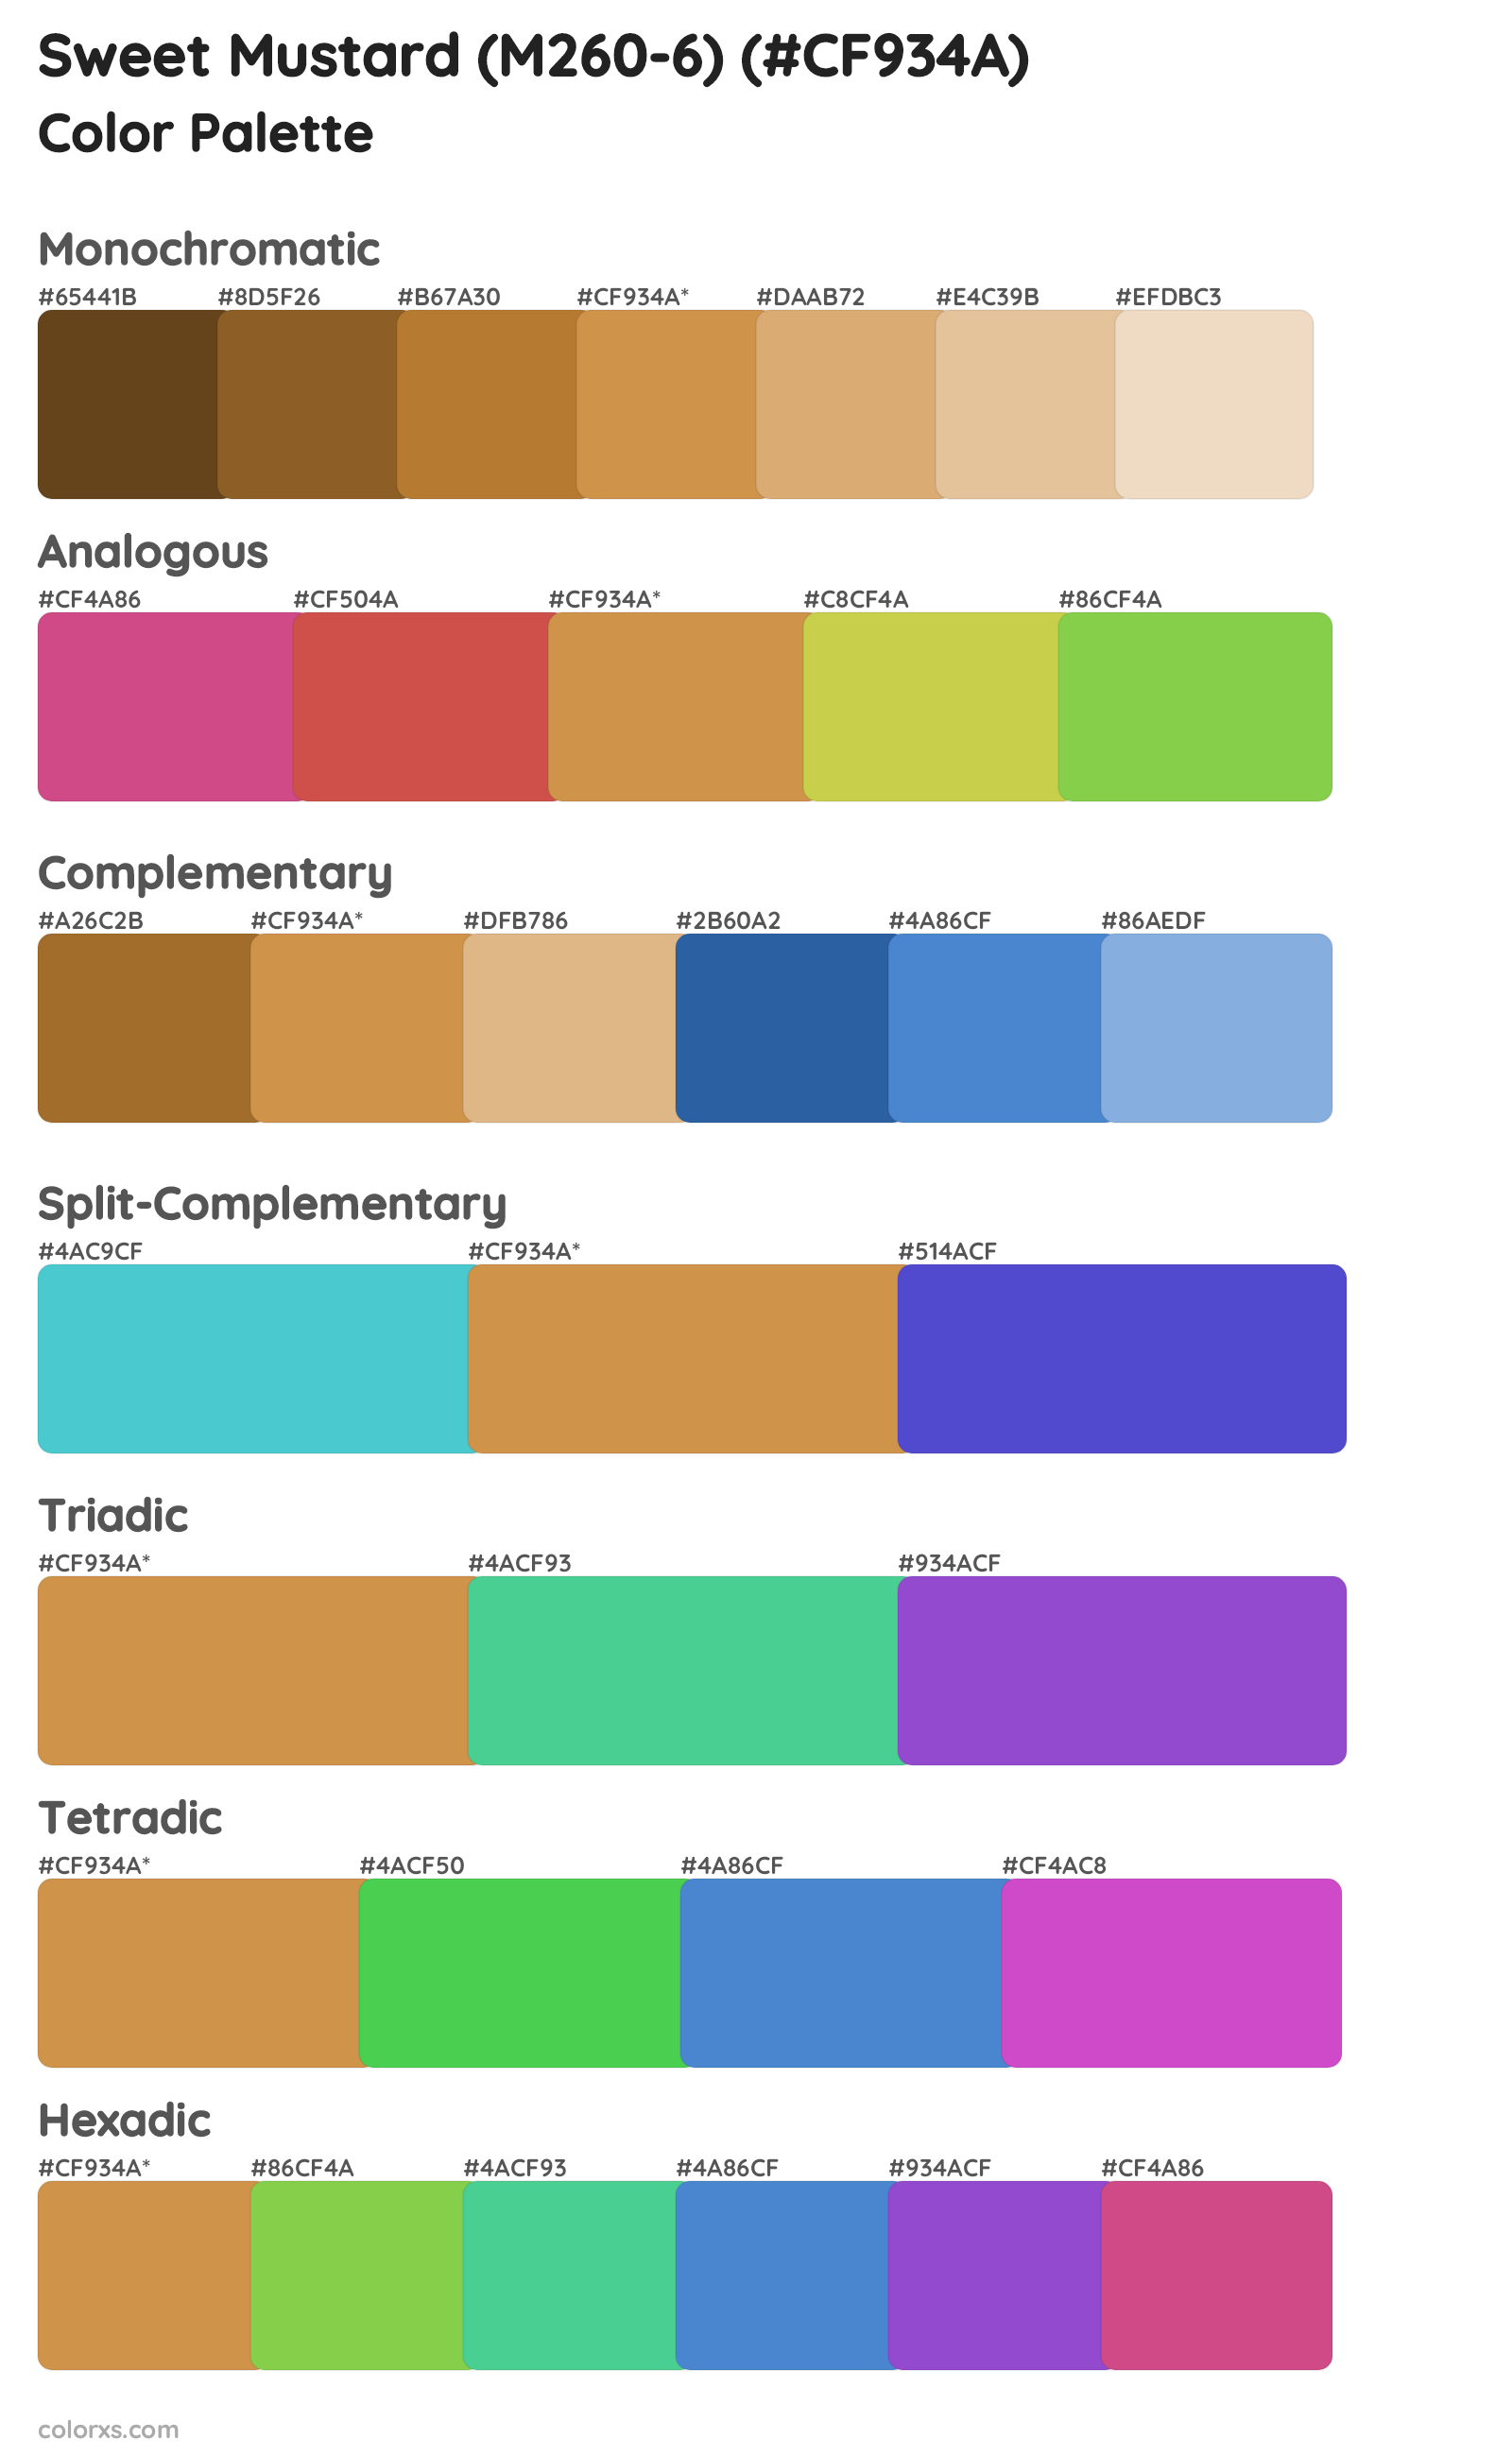 Sweet Mustard (M260-6) Color Scheme Palettes